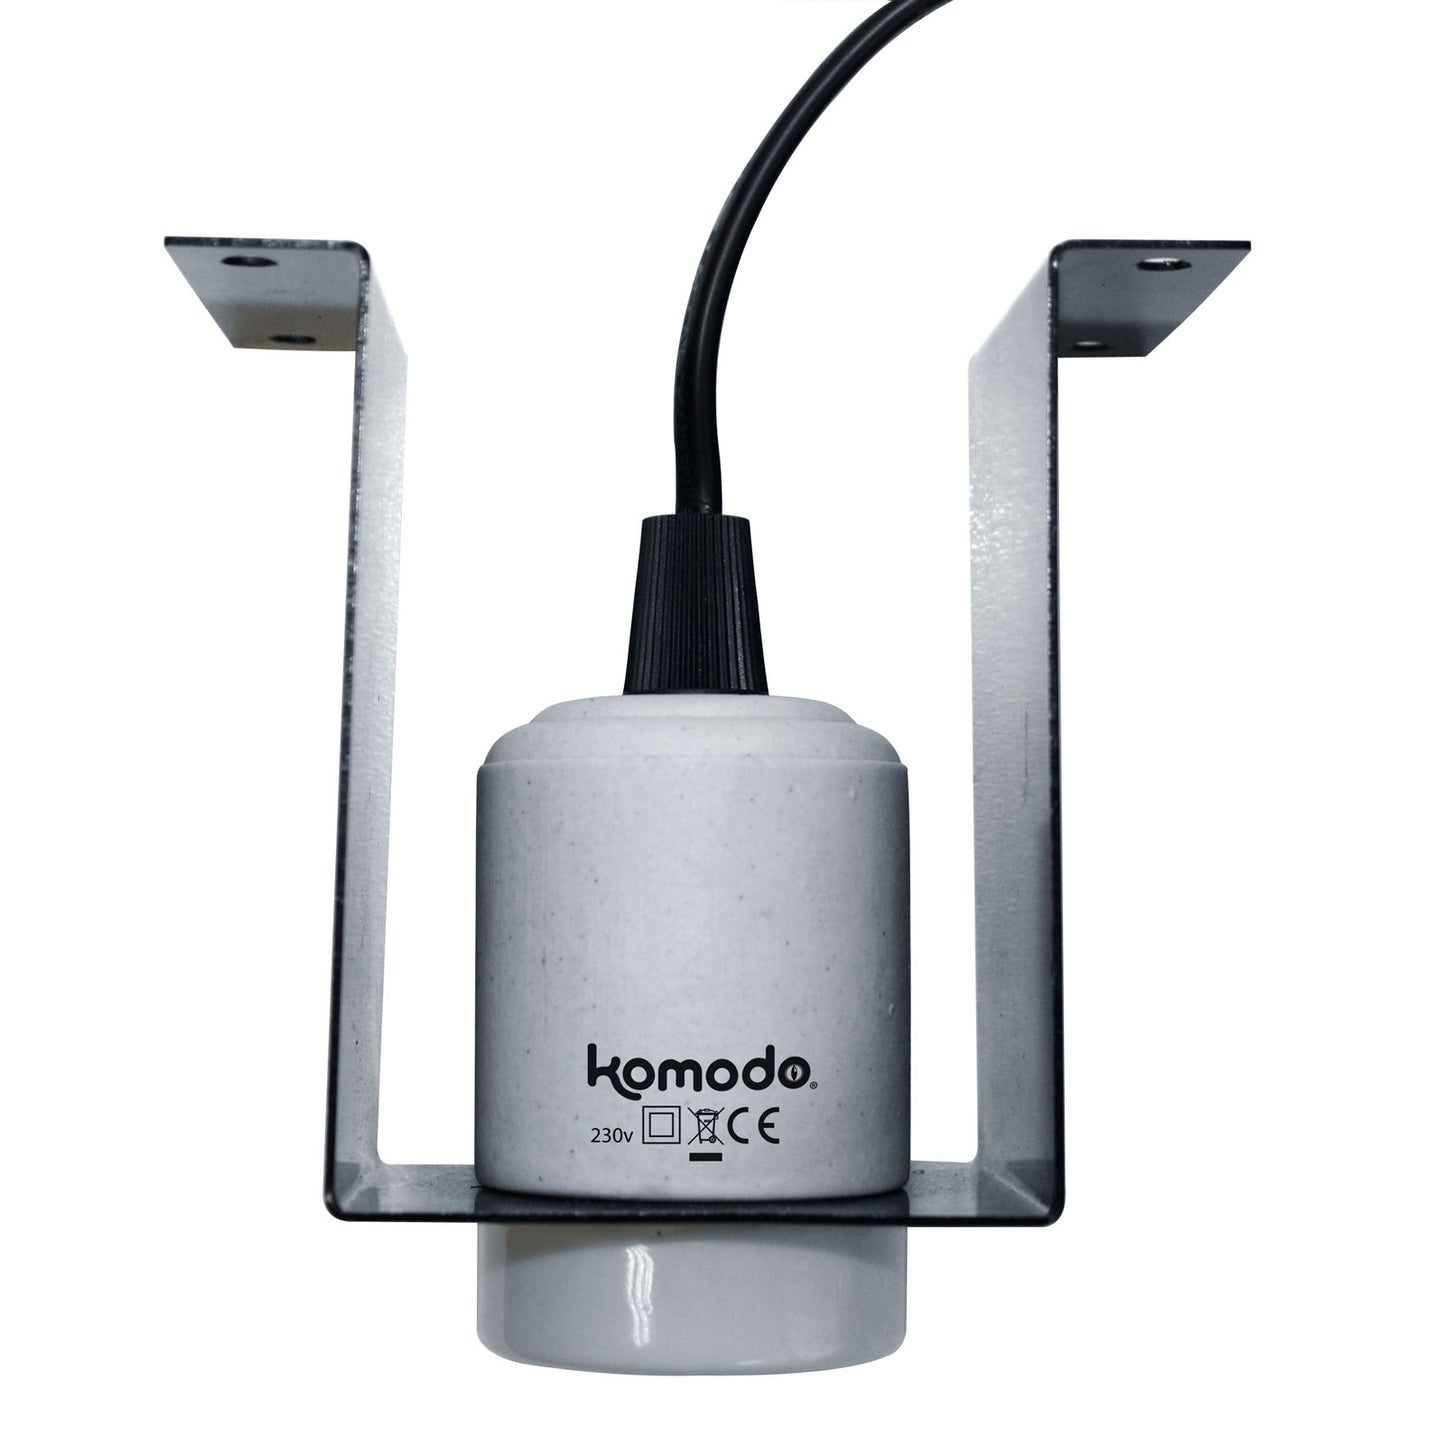 Komodo Ceramic ES Lamp Fixture and Mounting Bracket